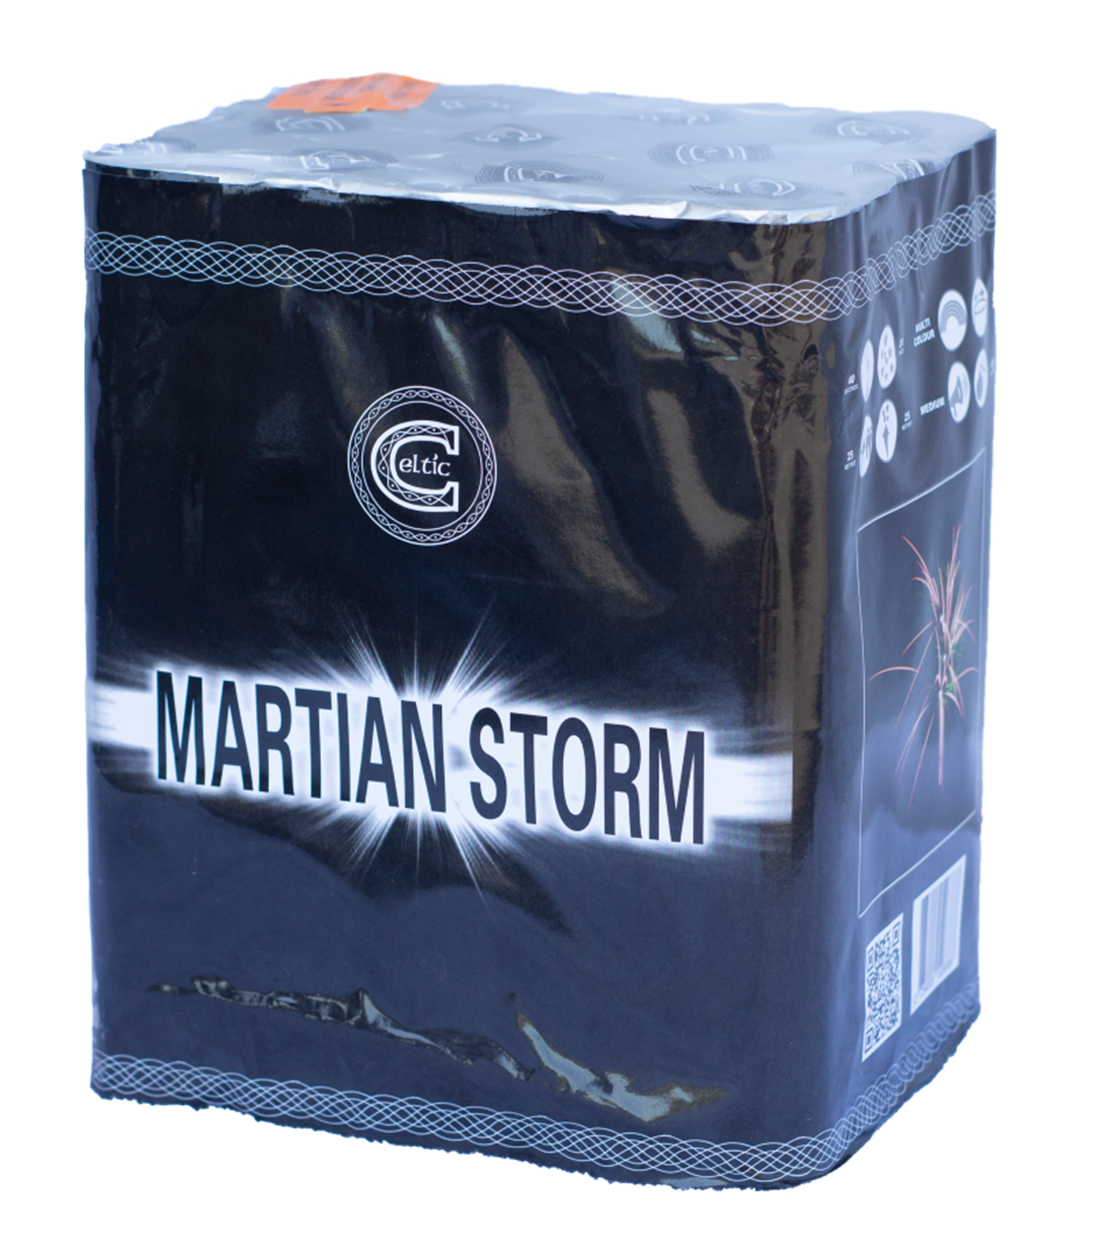 Martian Storm by Celtic Fireworks